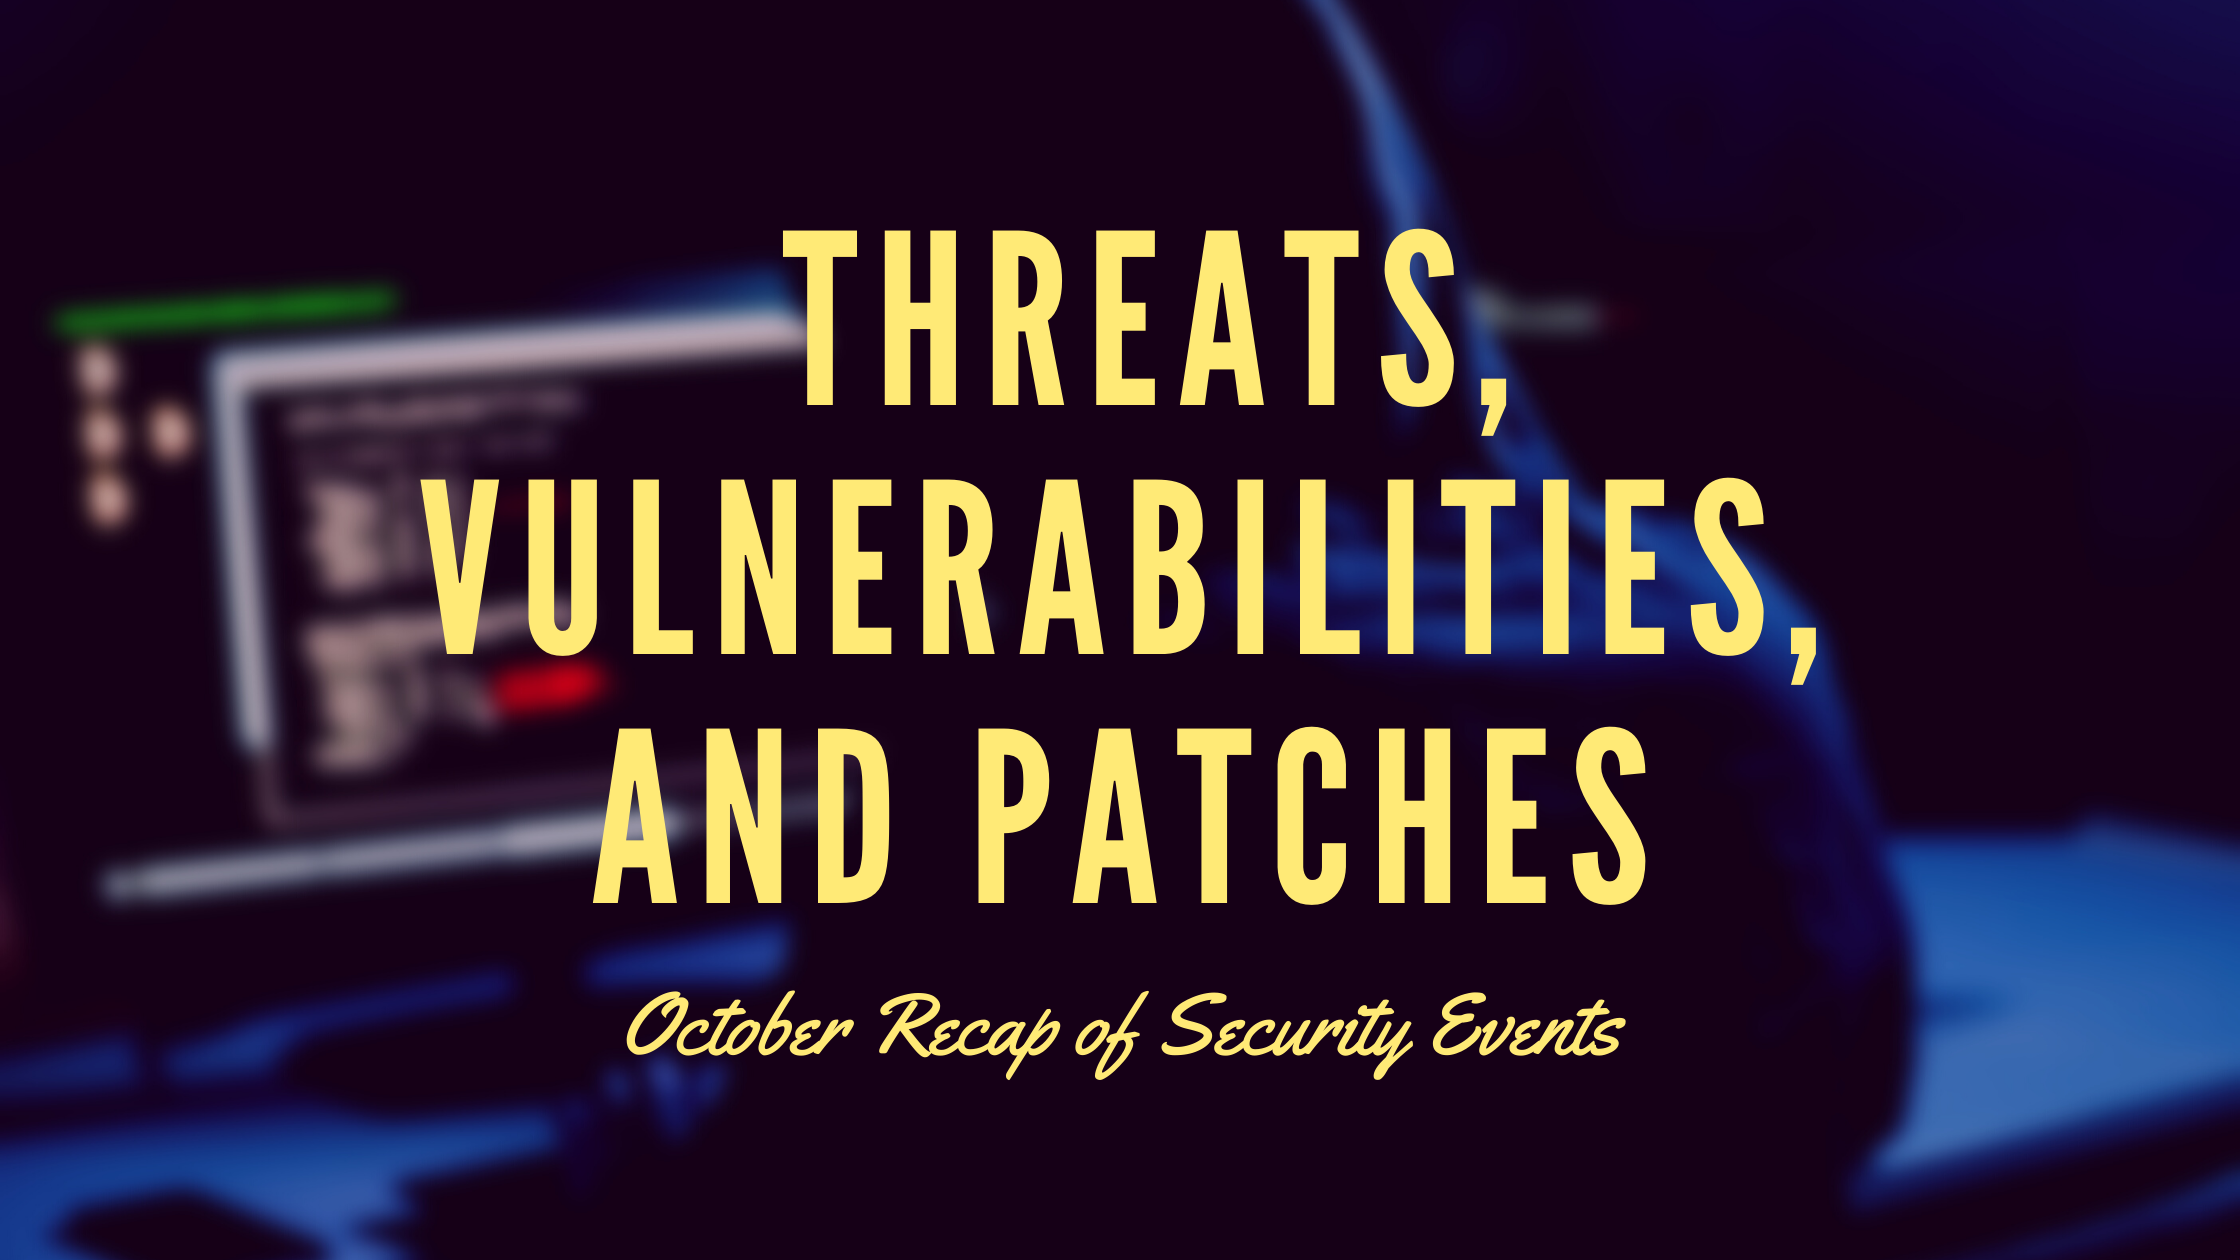 [Security Tip] October's Security Threats Summarized